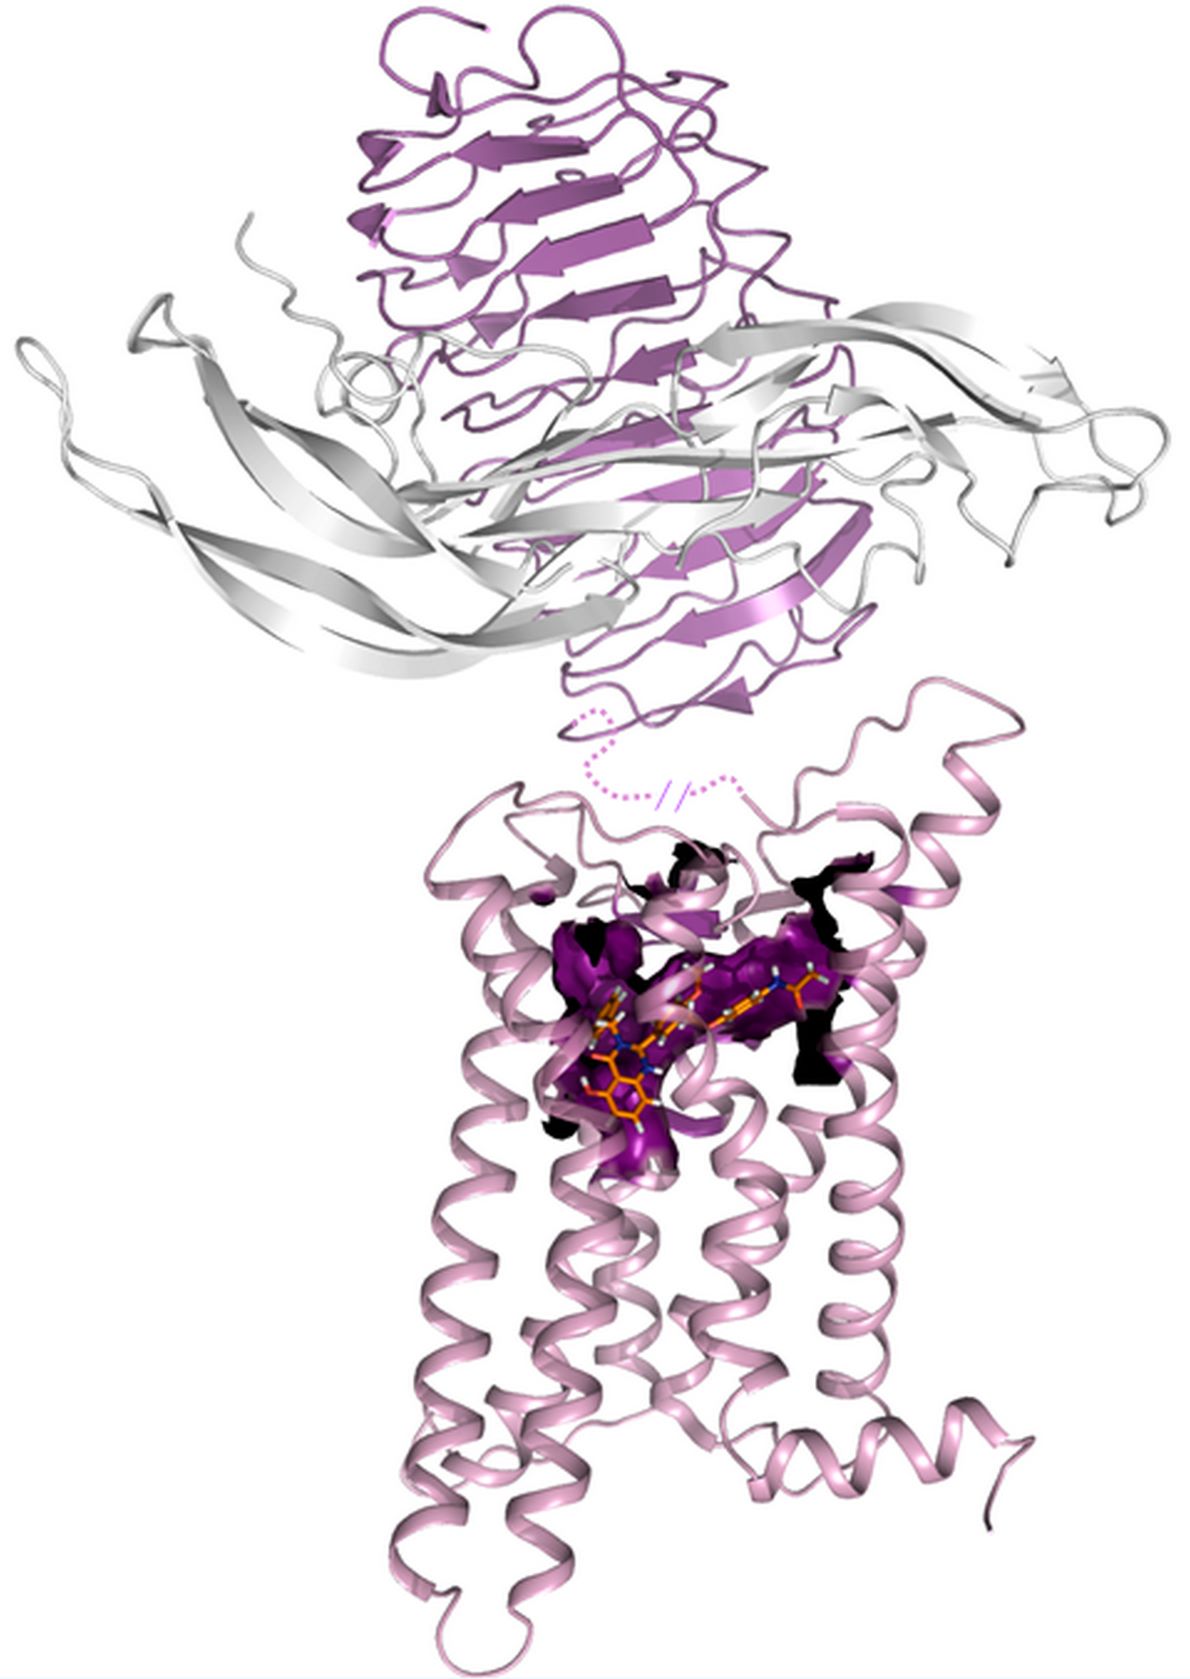 TSH receptor model with ligand binding sites